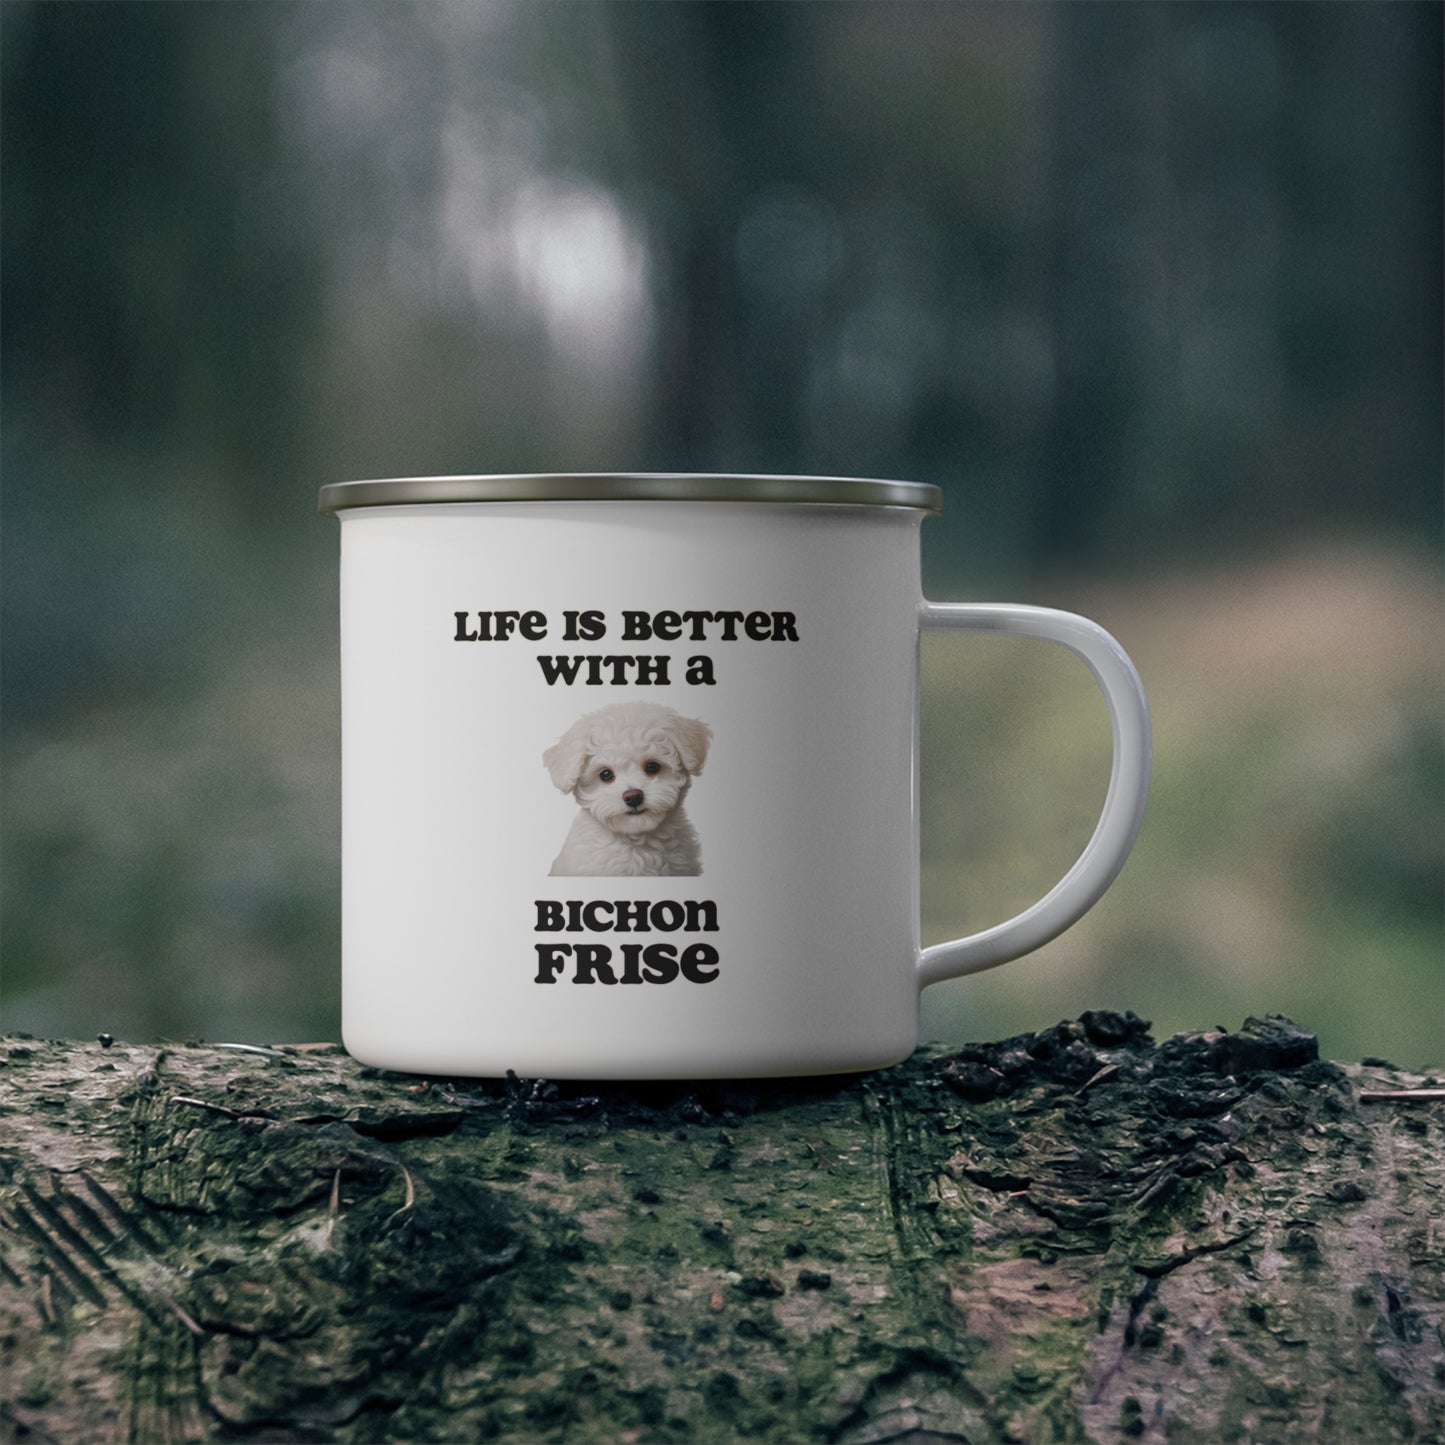 Bichon Frise Enamel Mug -  Life is Better with a Bichon Frise Camping Mug